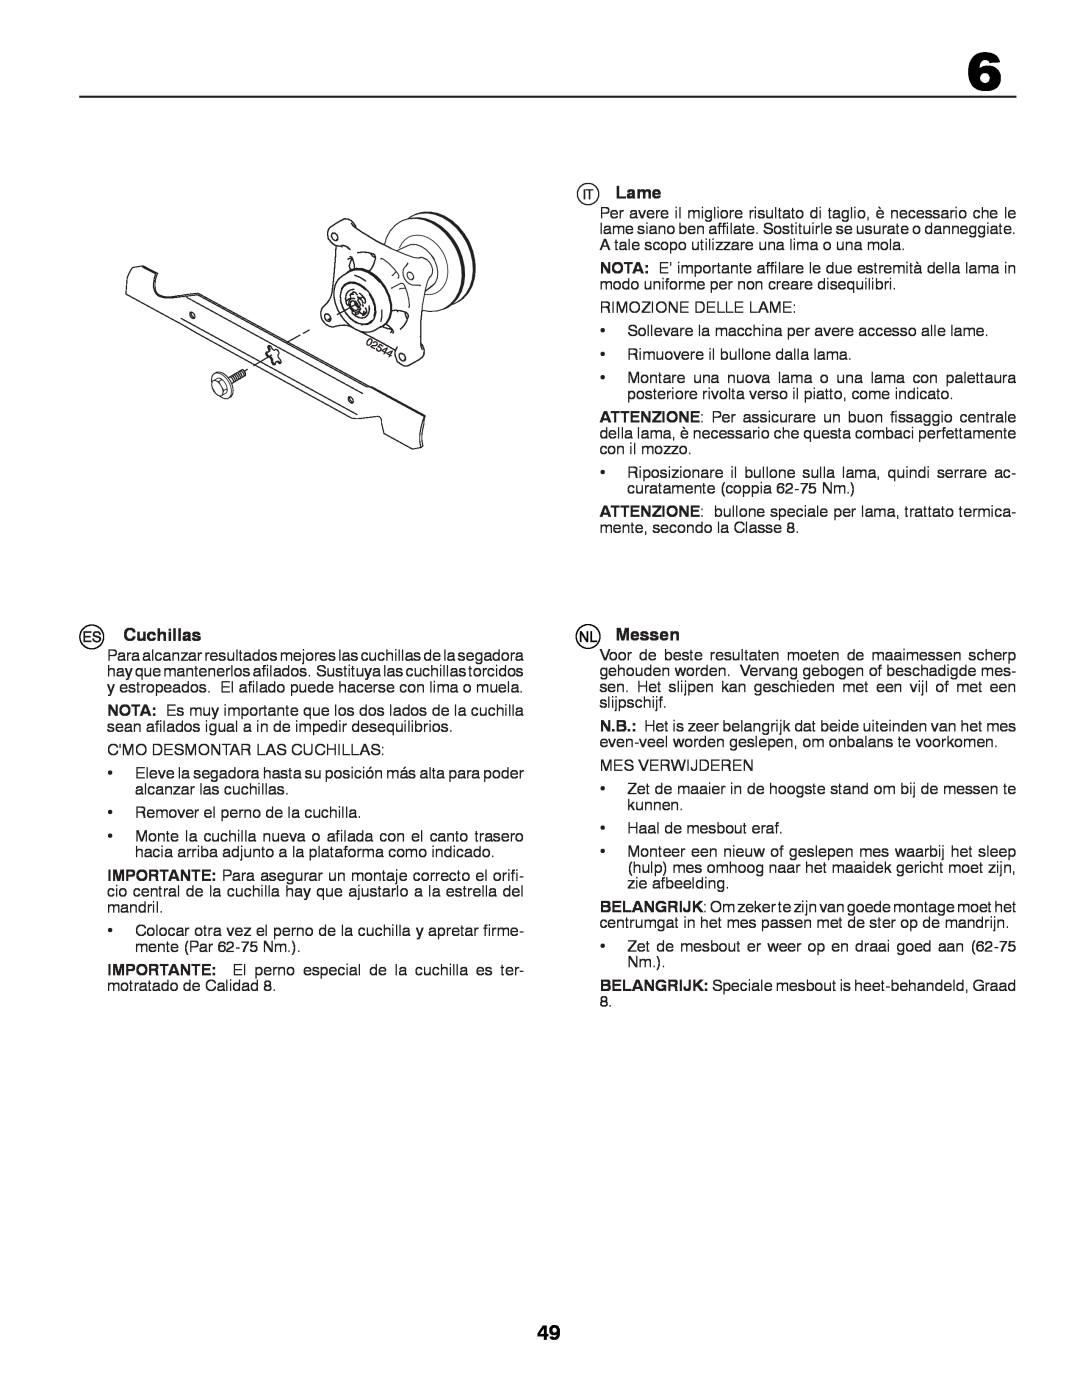 Husqvarna LT131 instruction manual Cuchillas, Lame, Messen 